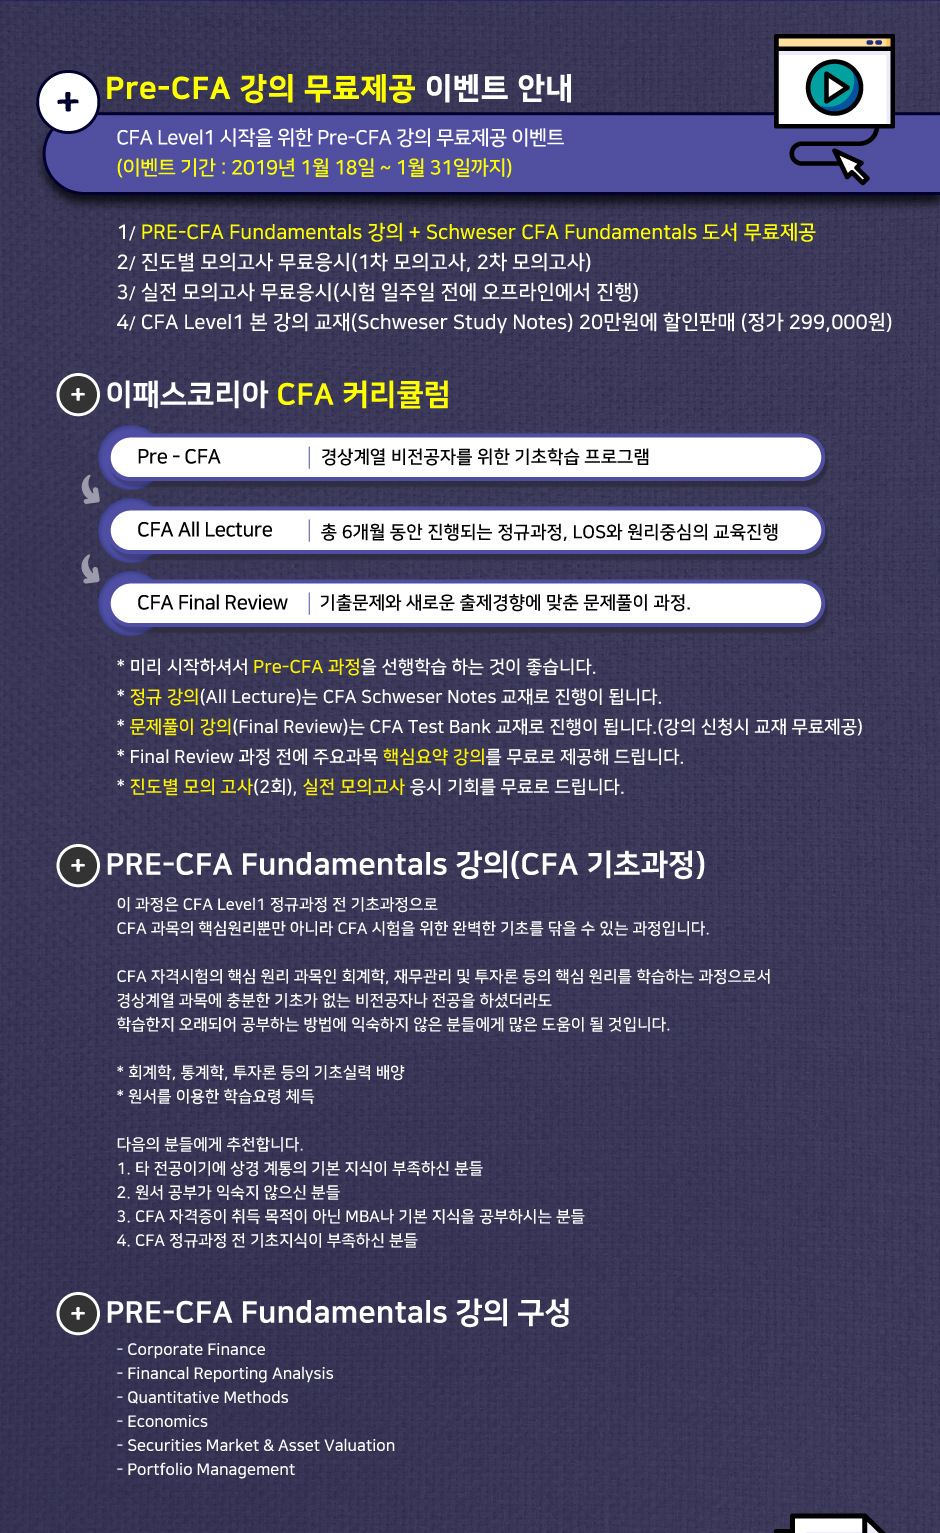 Pre-CFA 강의 & CFA Fundamentals 교재 무료제공